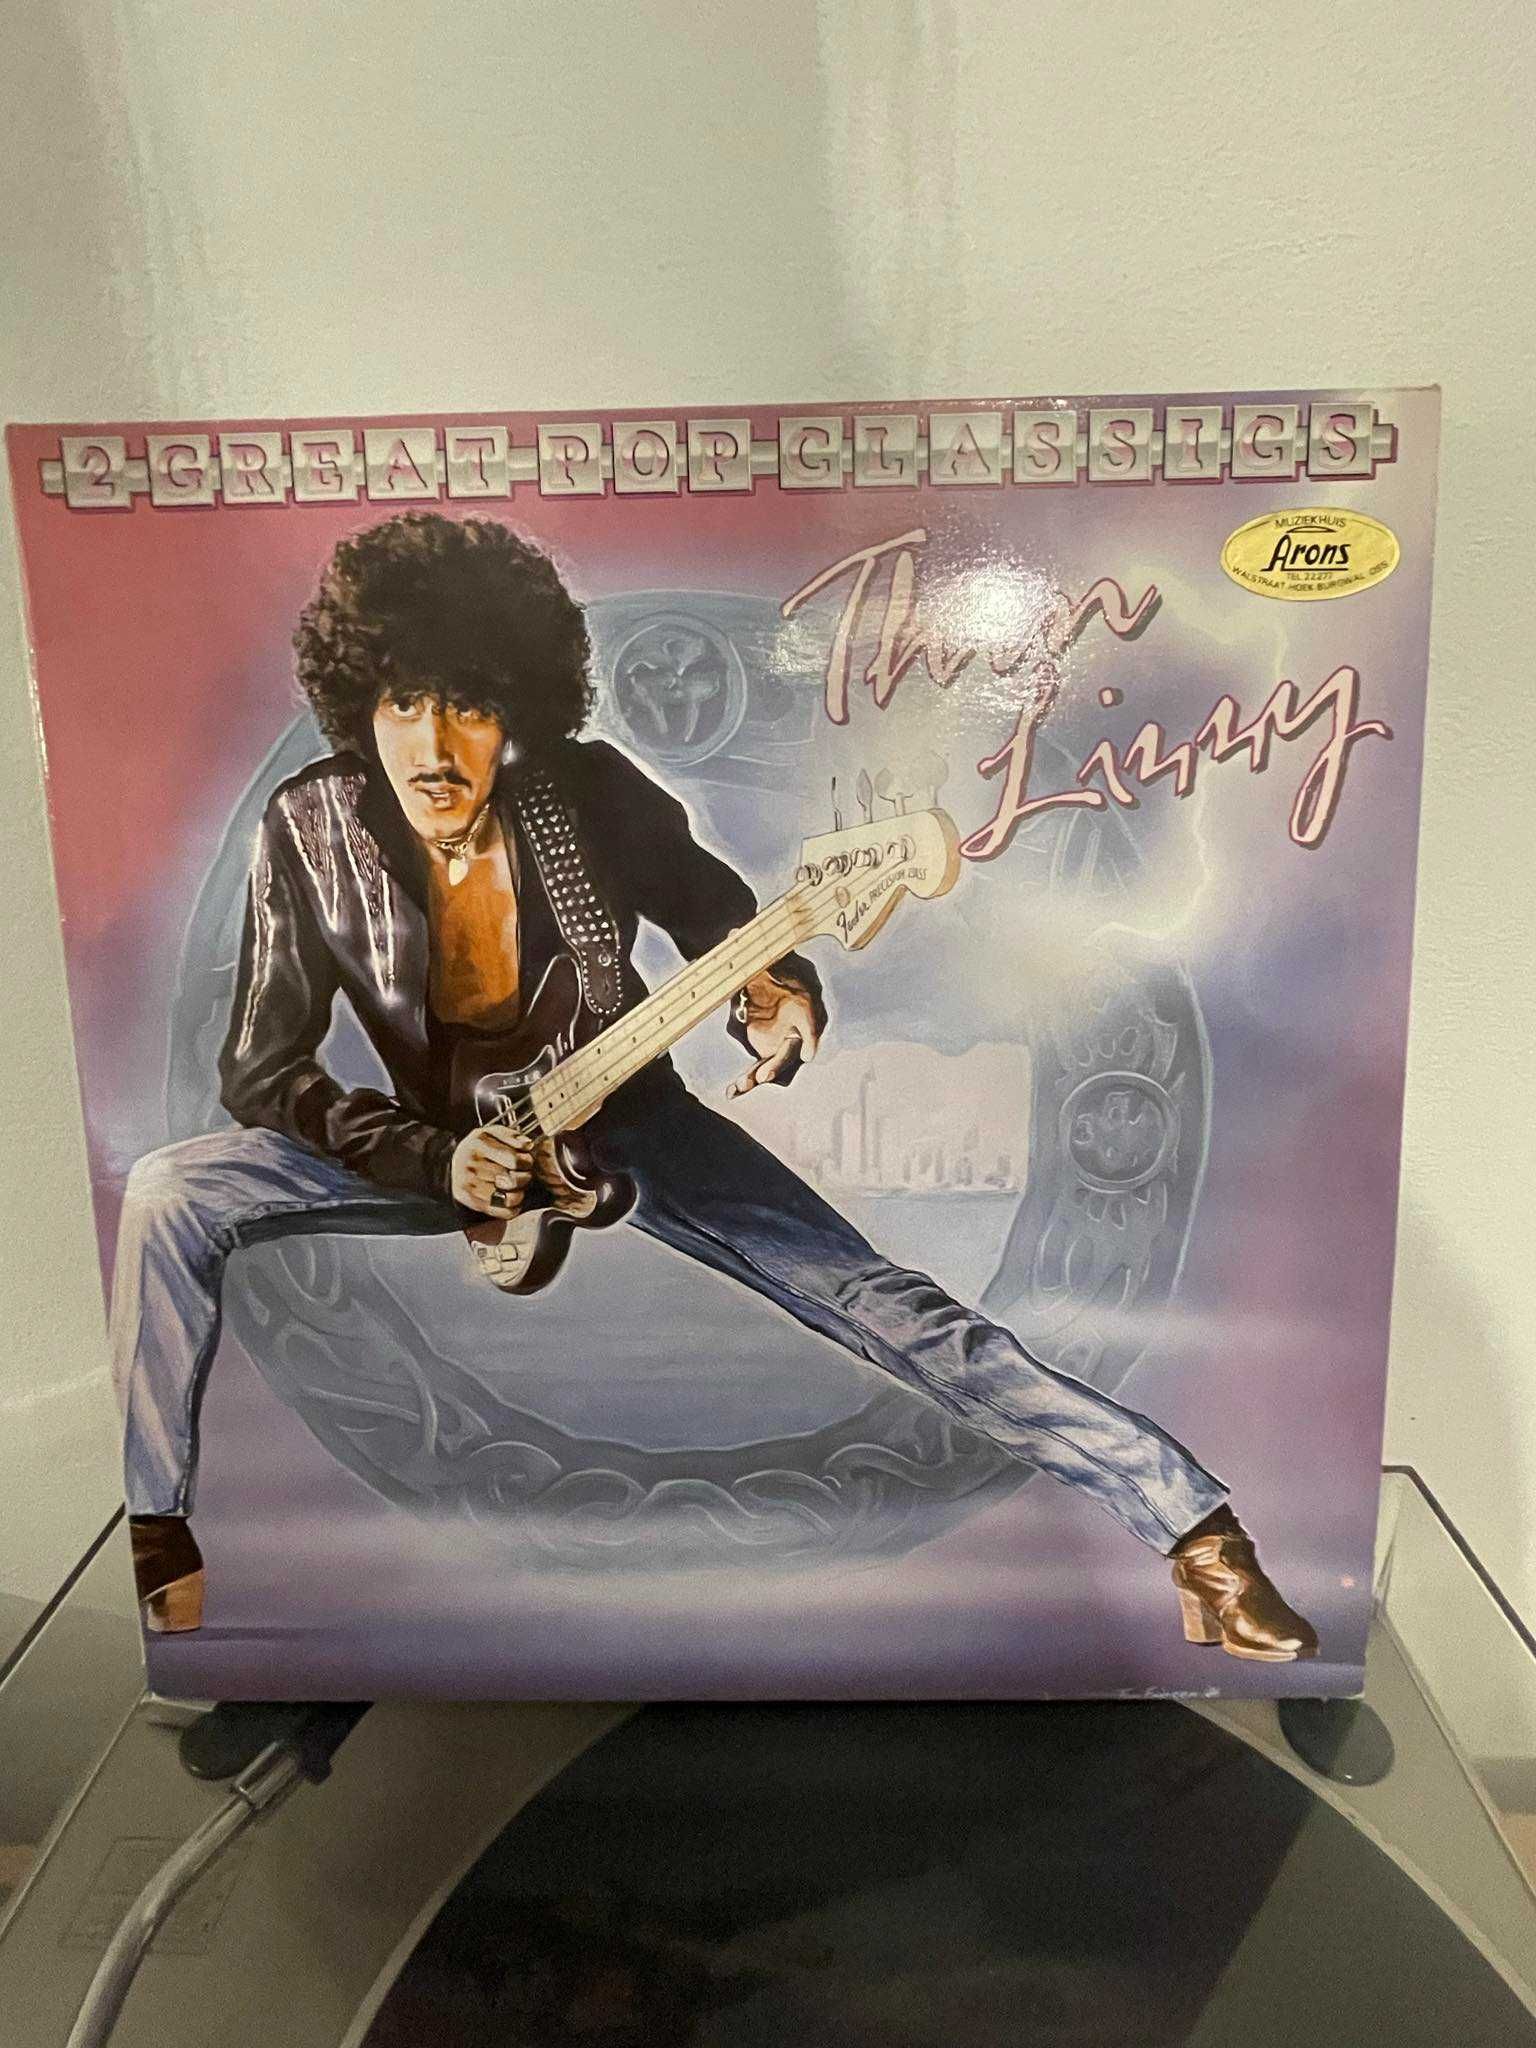 Thin Lizzy – 2 Great Pop Classics